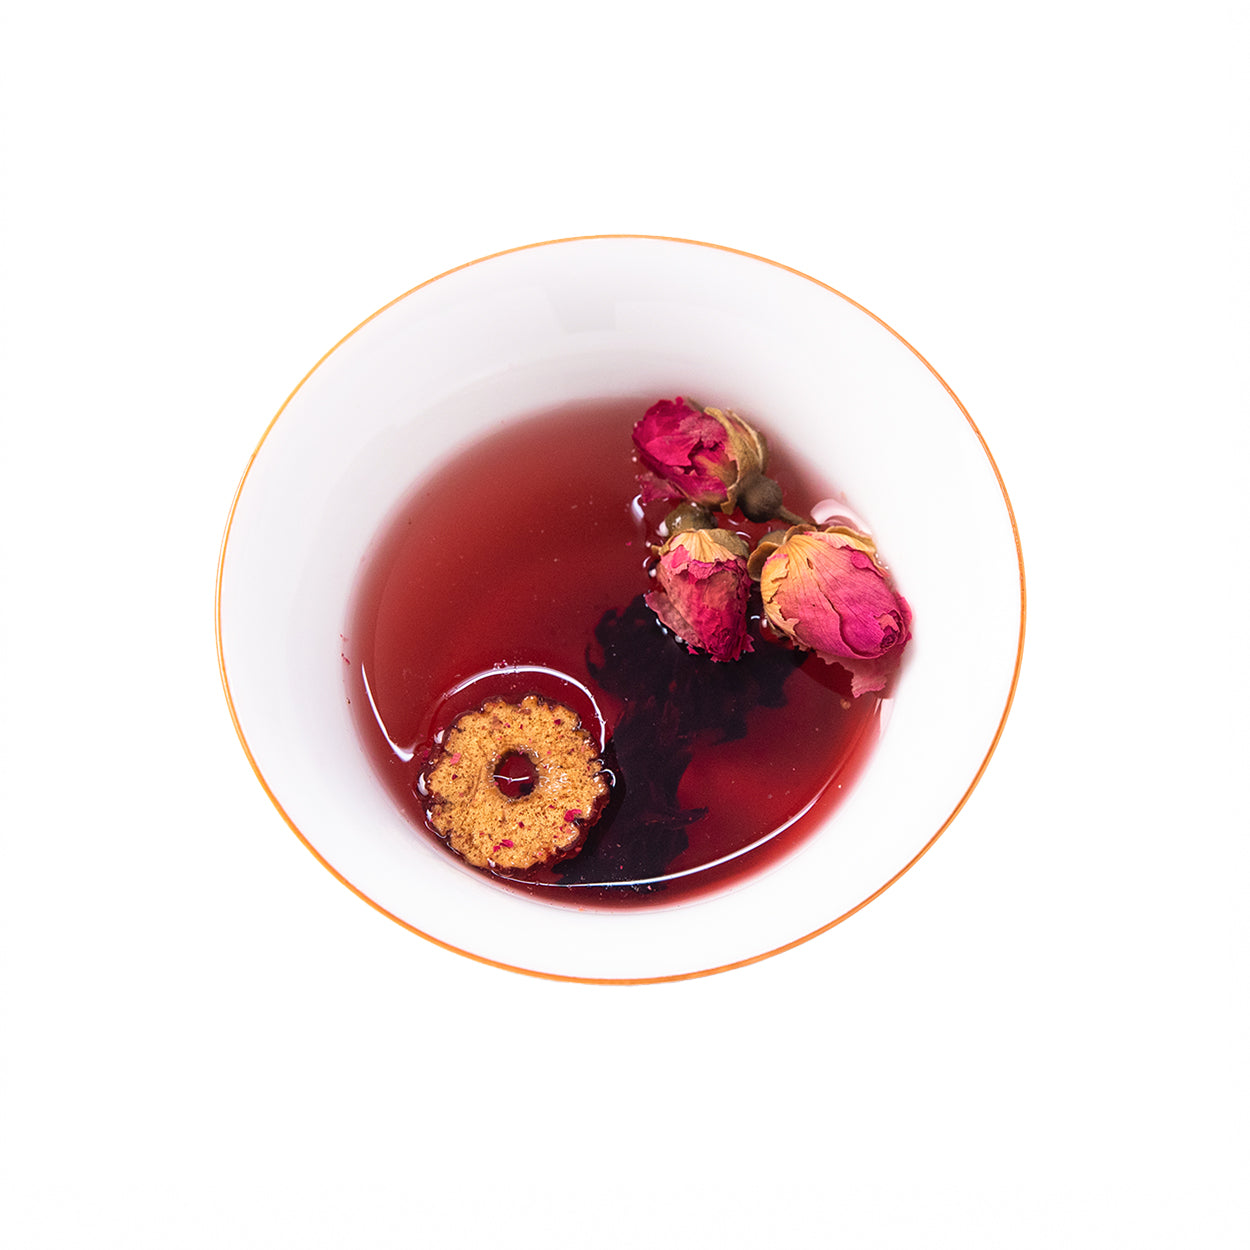 山楂玫瑰洛神花茶 - Roselle Hawthorn Rose Tea